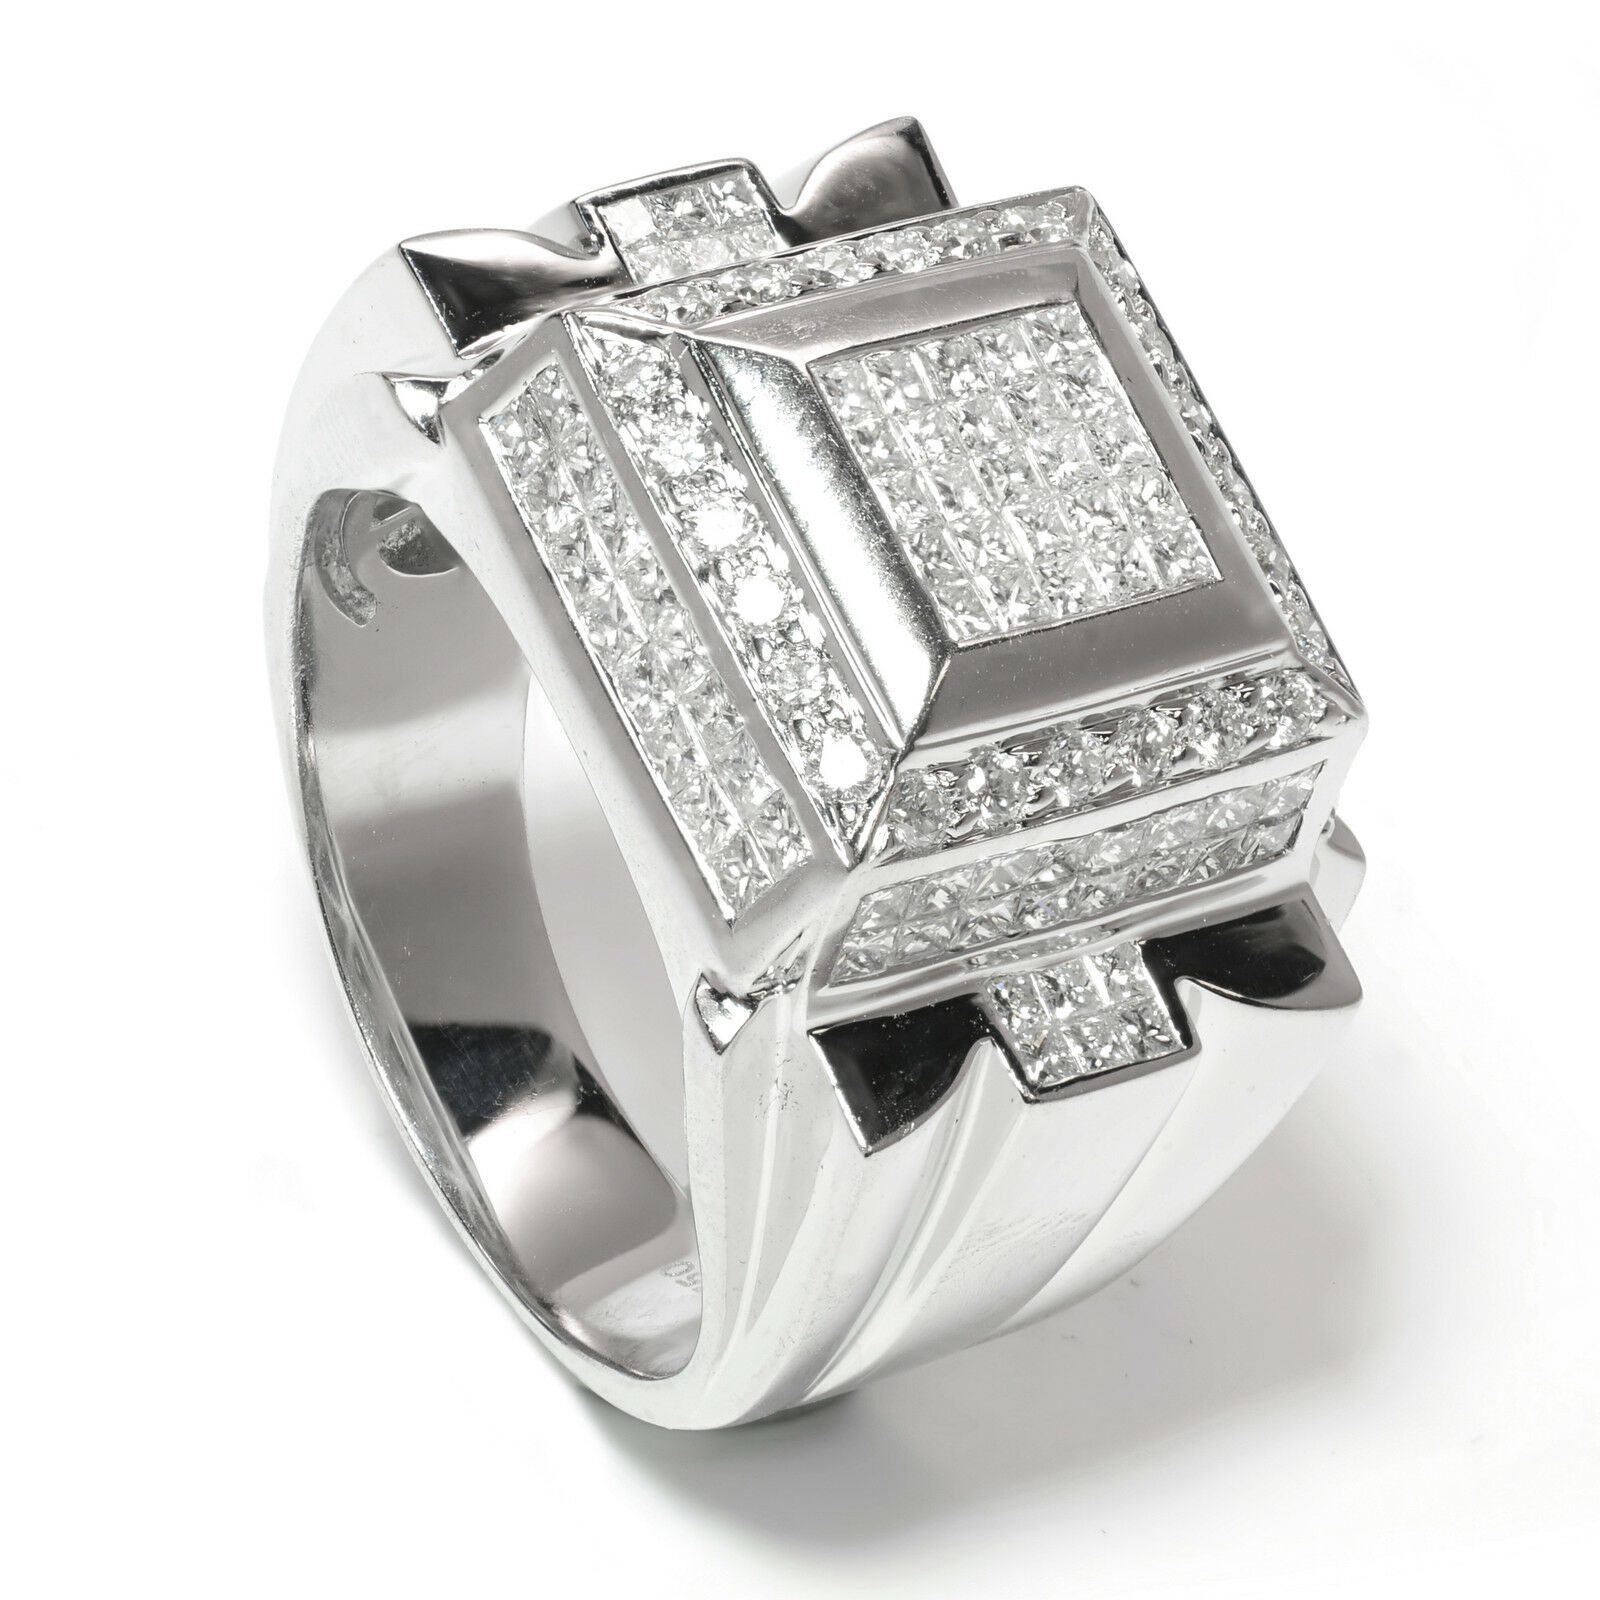 Mens-Iced-Diamond-Cap-Ring-in-18k-White-Gold-273-Carat-Size-10-111881608011